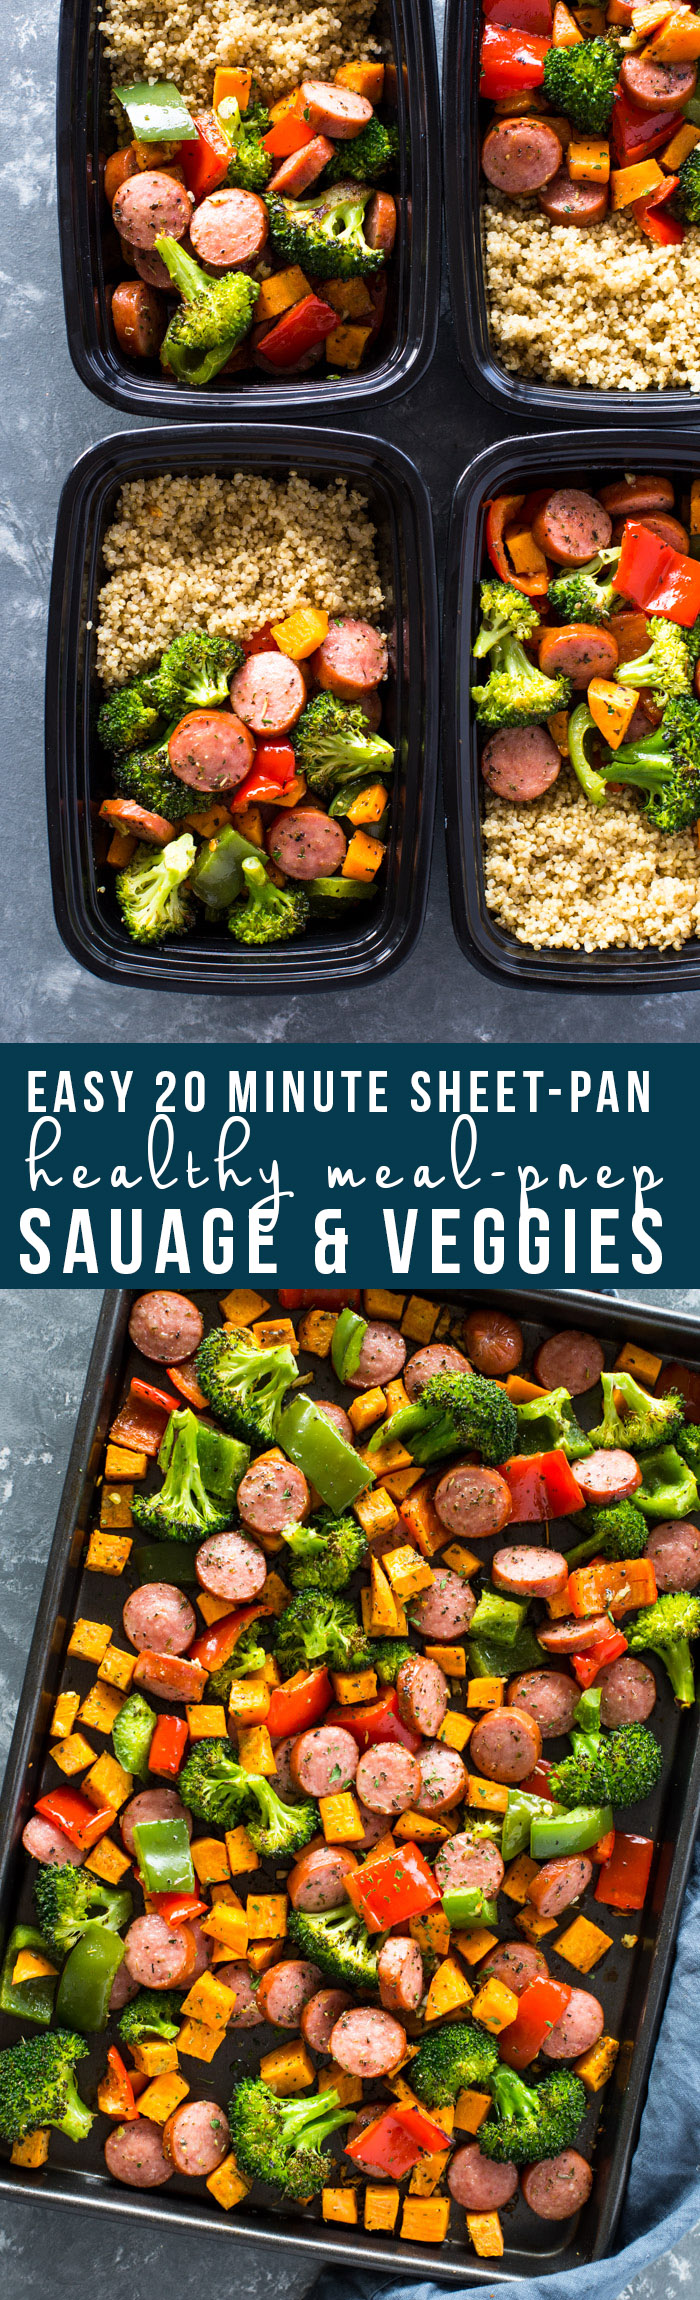 Roasted Sausage, Veggies and Quinoa Meal-Prep 